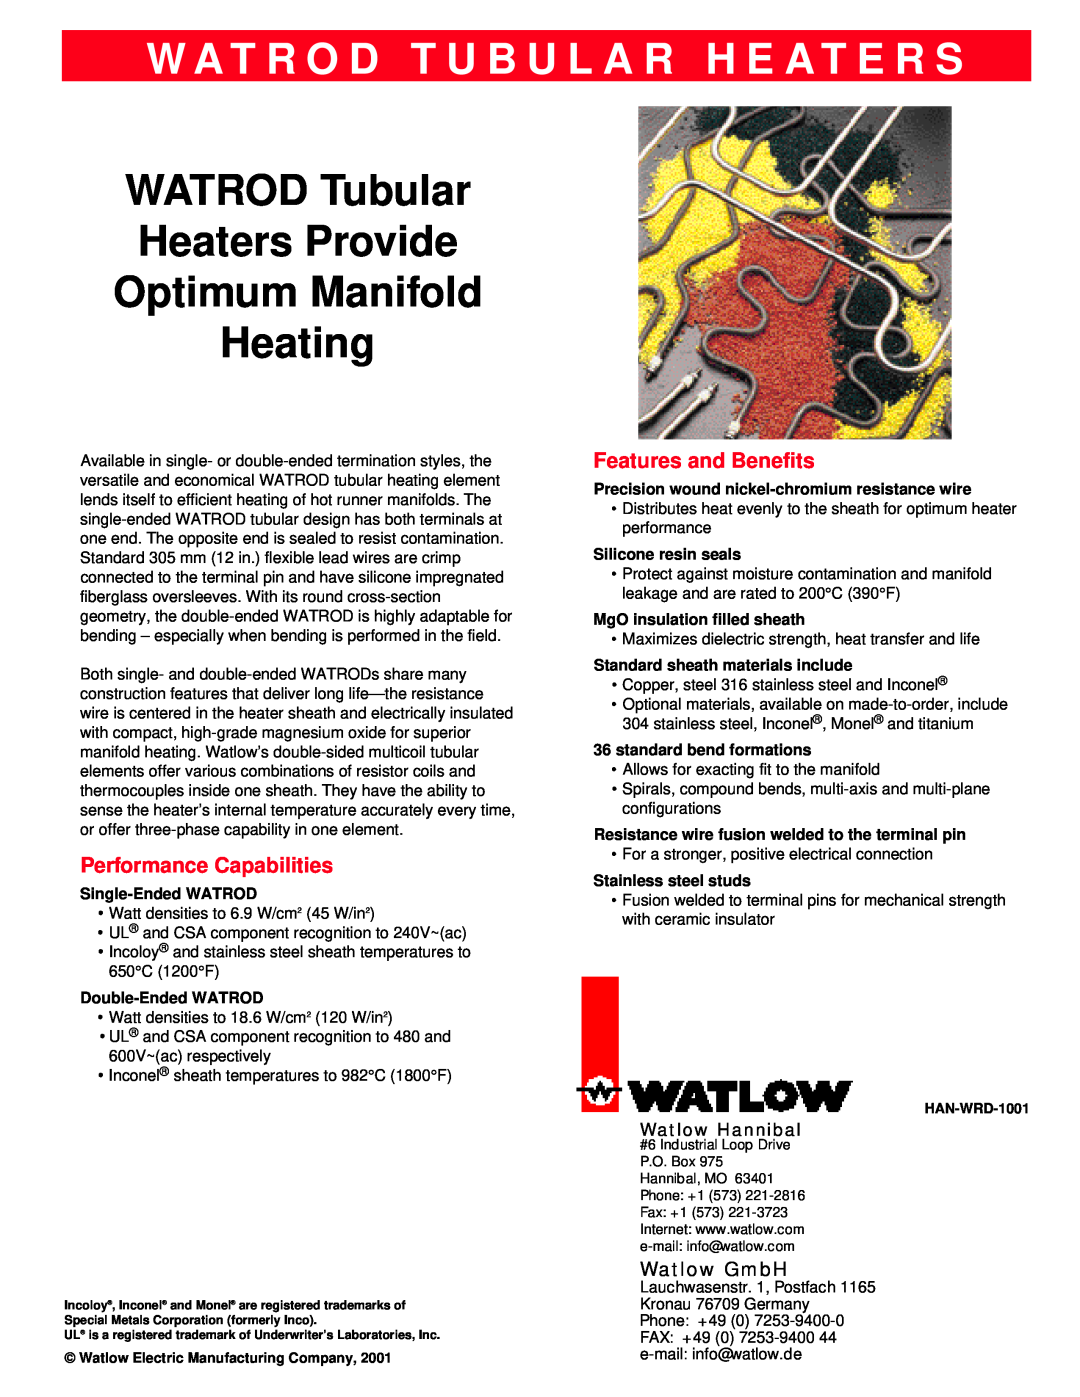 Watlow Electric Electric Tubular Heaters manual W A T R O D T U B U L A R H E A T E R S, Performance Capabilities 